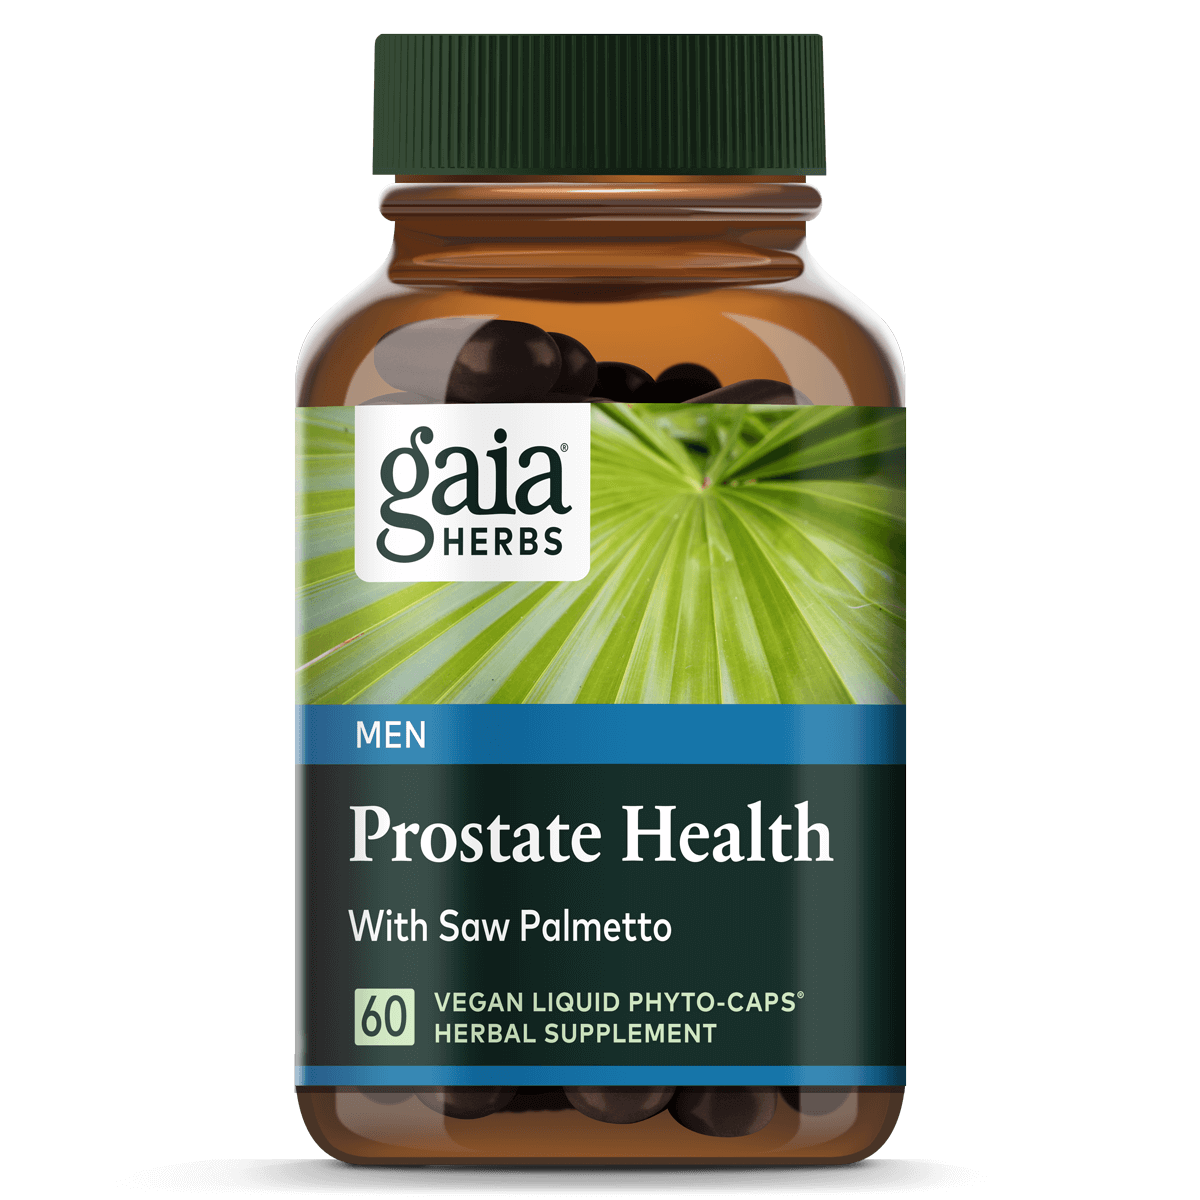 Gaia Herbs Prostate Health for Men